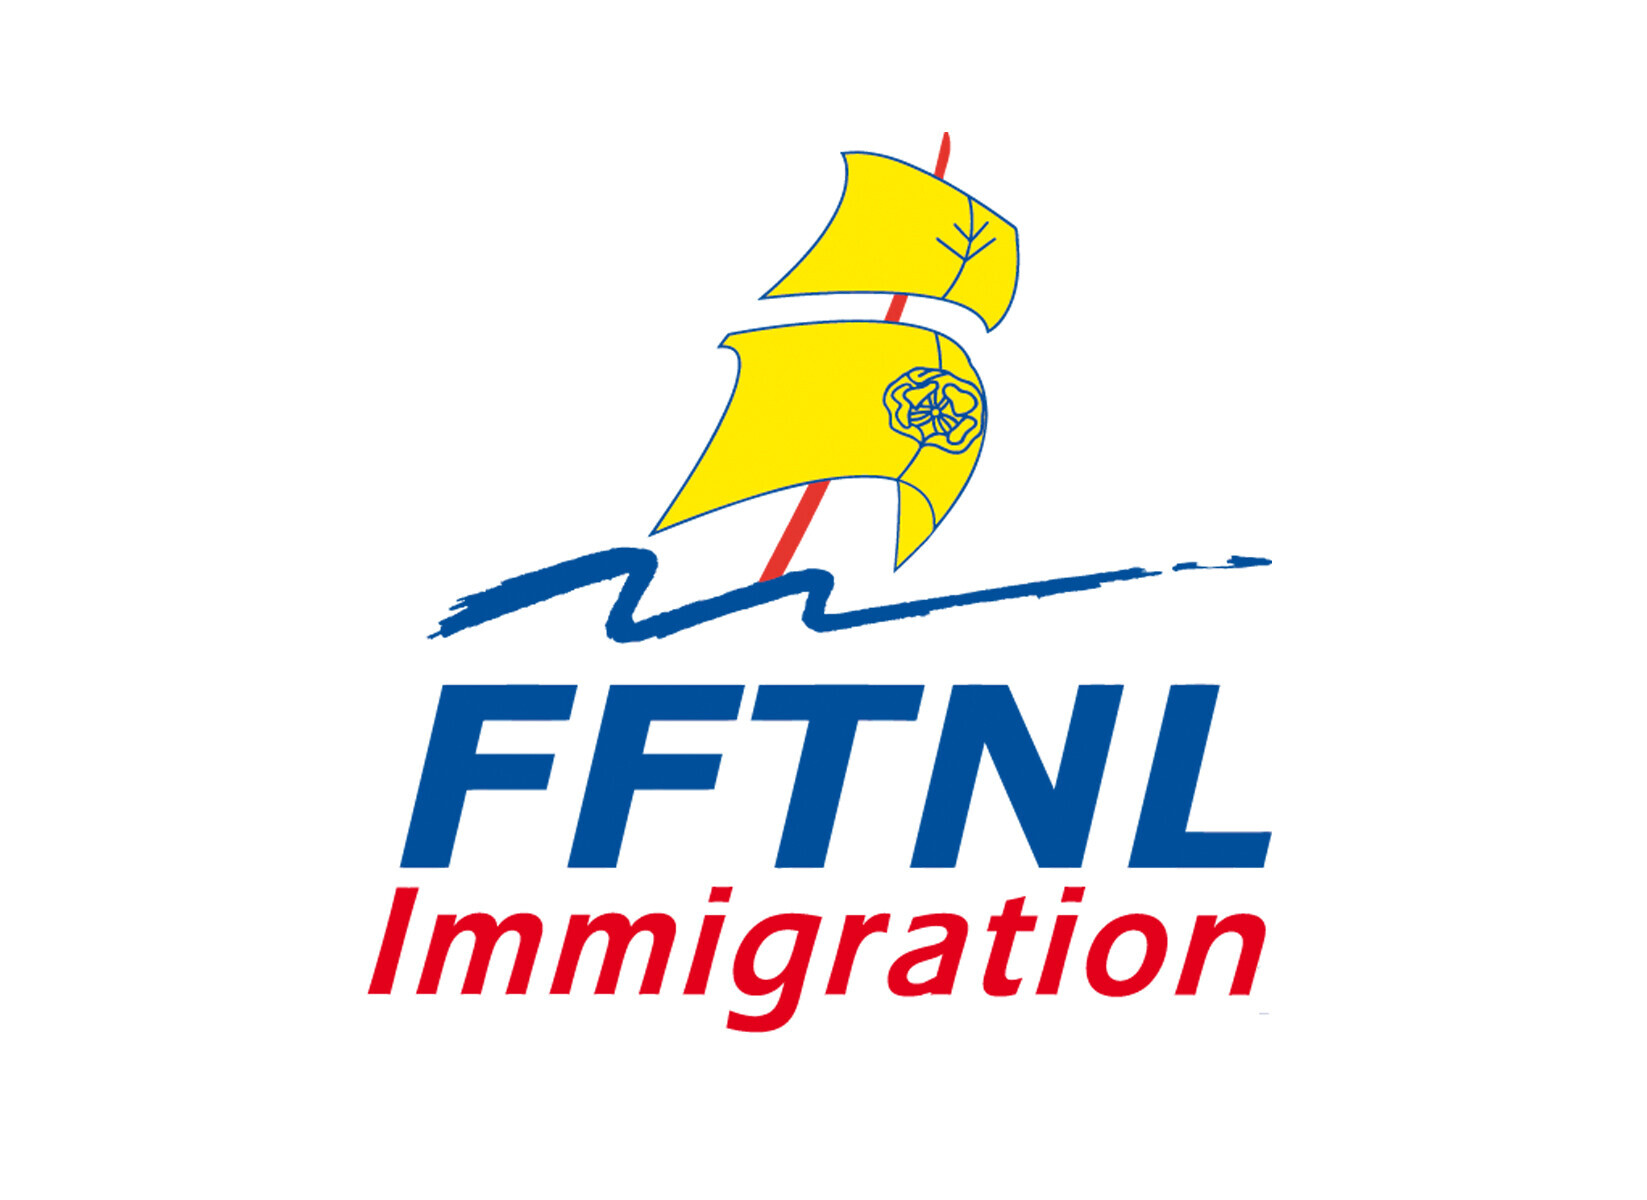 logo fftnl immigration